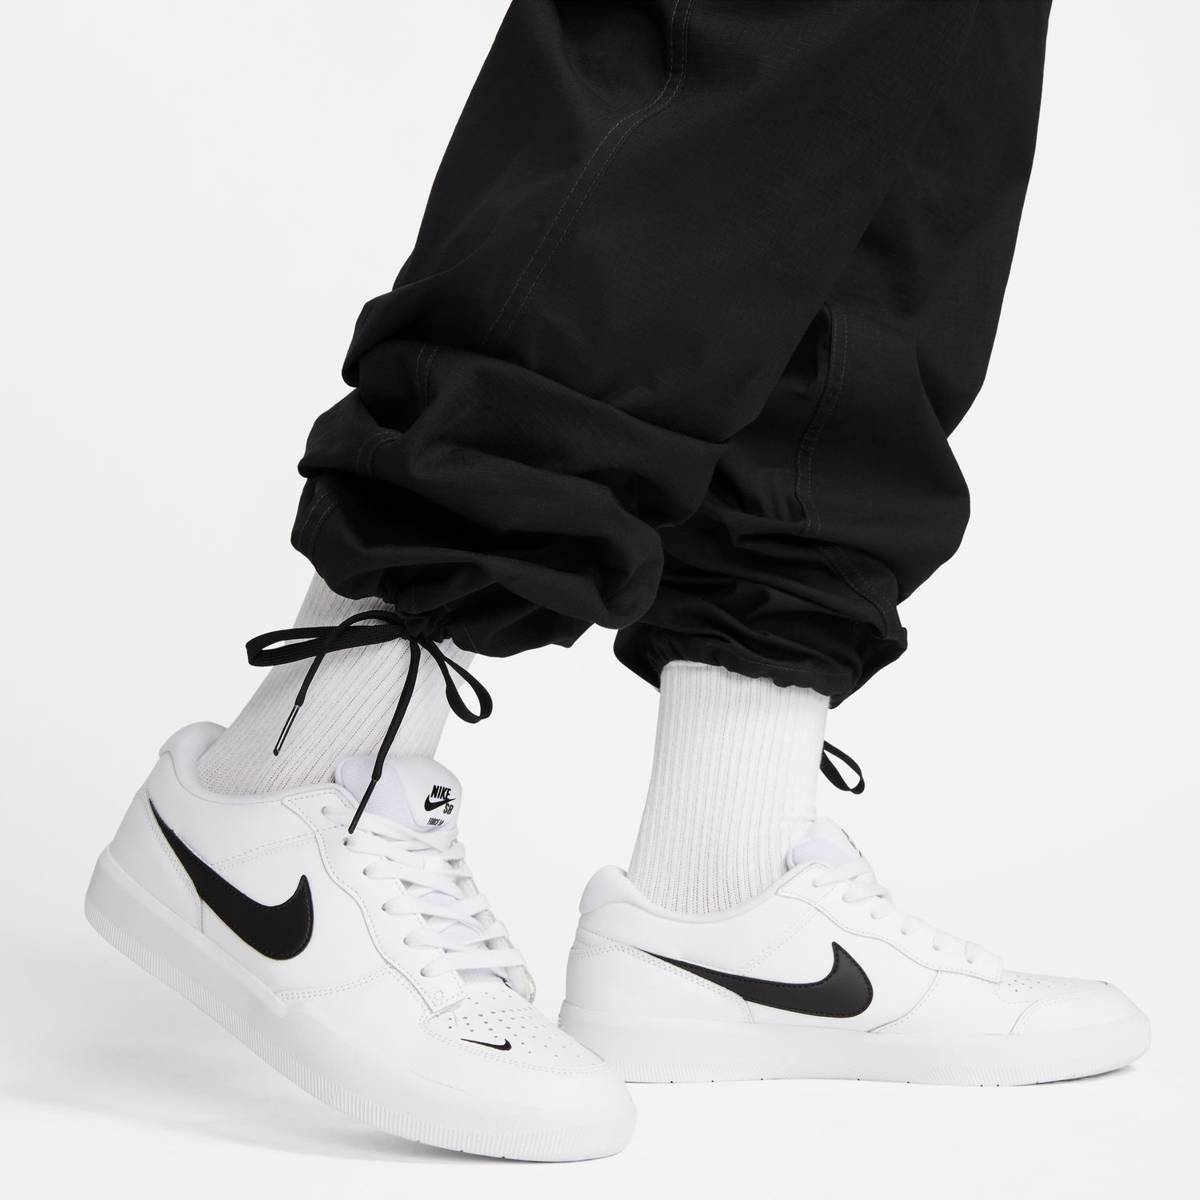 Nike Sb Kearny Cargo Pant BLACK | Clothes \ Pants Brands \ Nike SB News ...